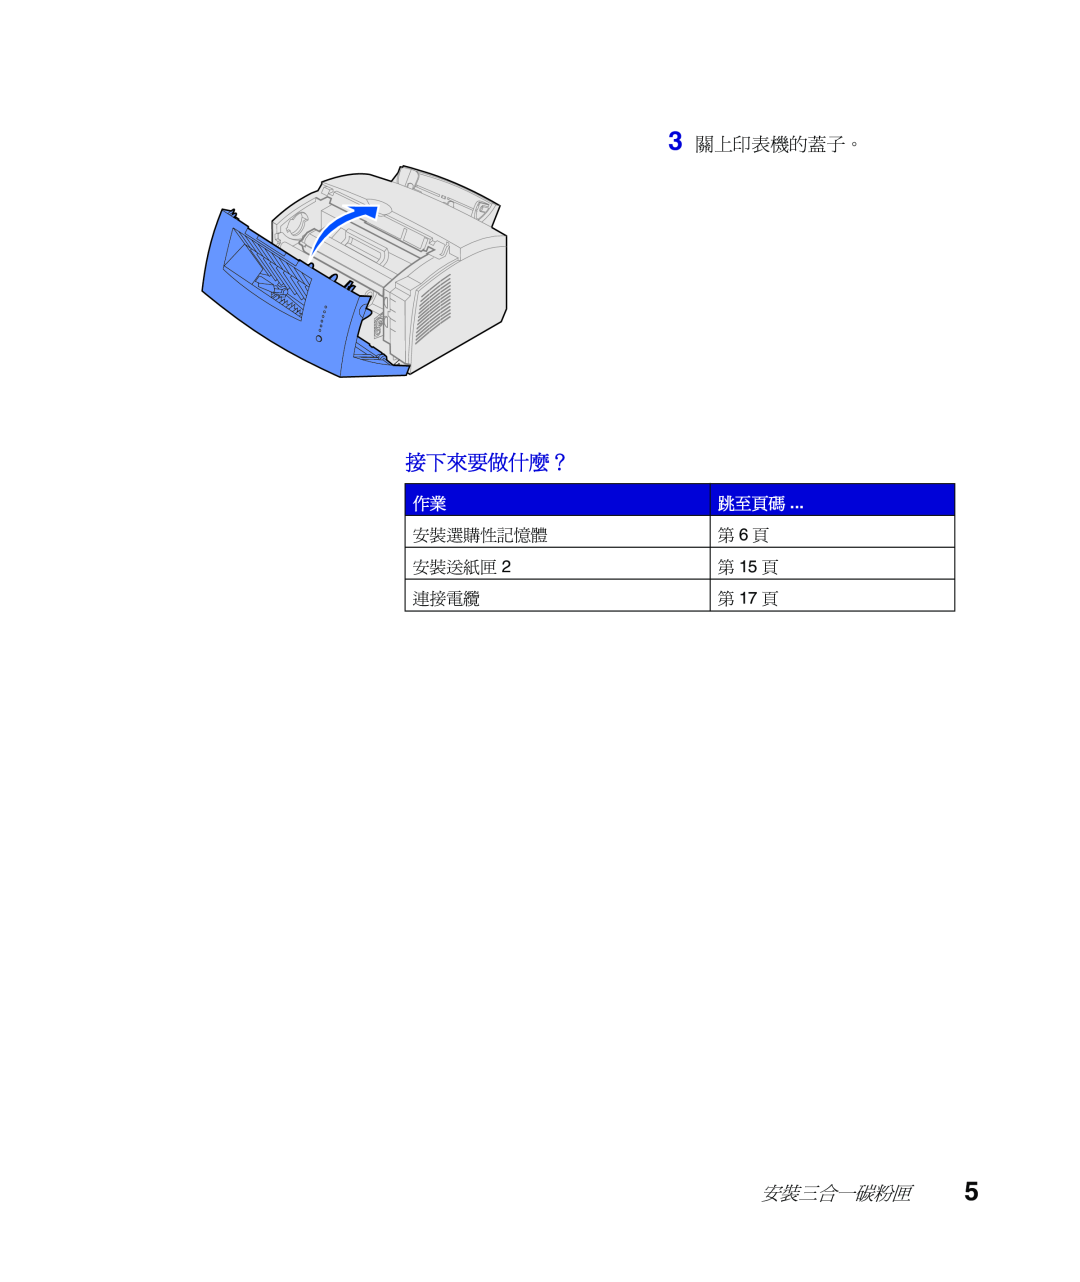 Lexmark Infoprint 1116 setup guide 接下來要做什麼？, 3 關上印表機的蓋子。, 安裝三合一碳粉匣, 跳至頁碼, 安裝選購性記憶體, 第 6 頁, 安裝送紙匣, 第 15 頁, 連接電纜, 第 17 頁 